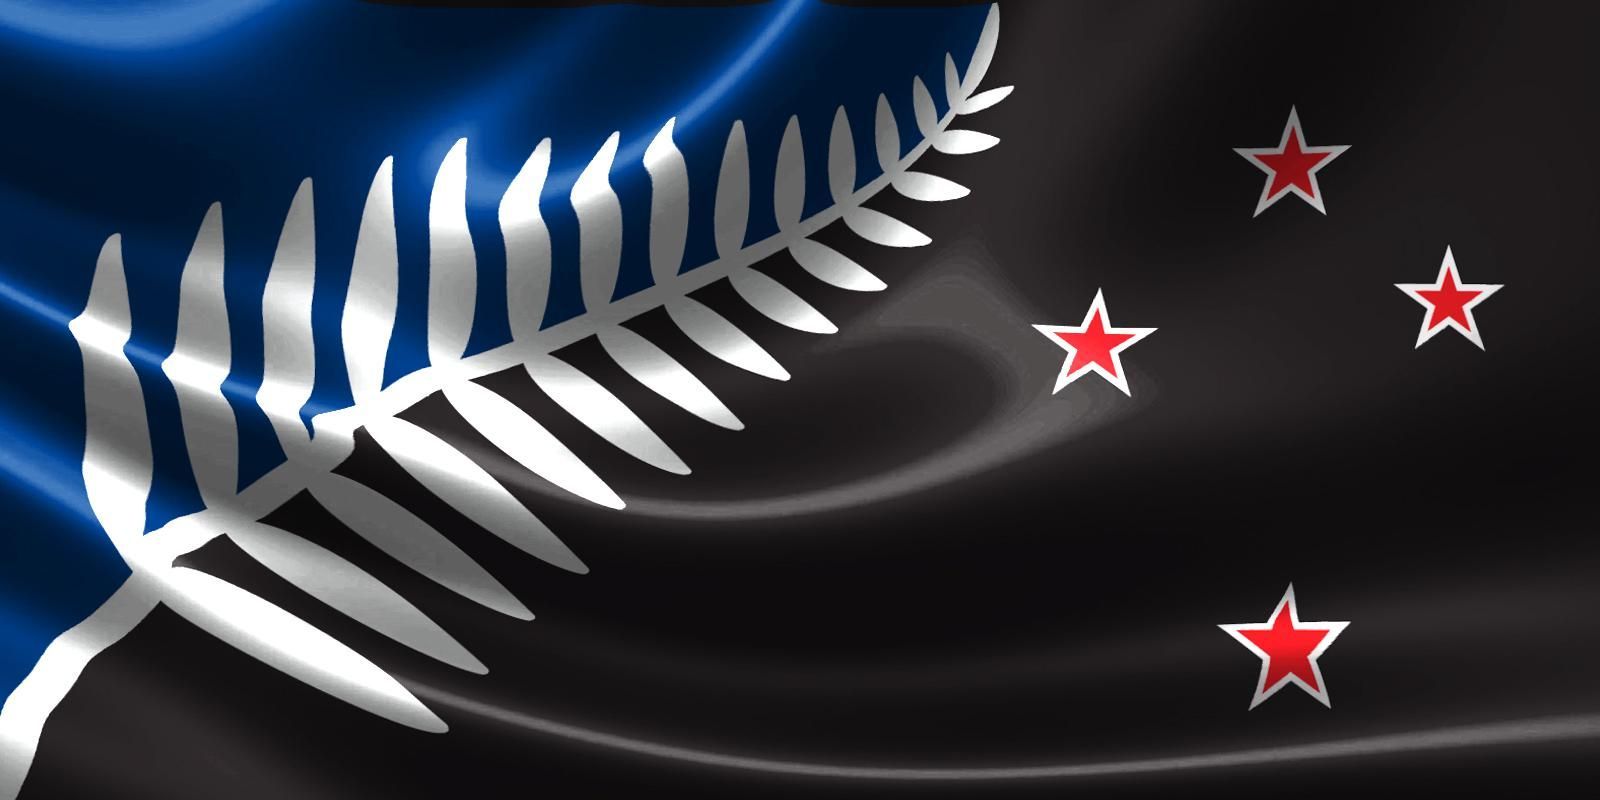 New Zealand All Blacks Wallpaper Free New Zealand All Blacks Background